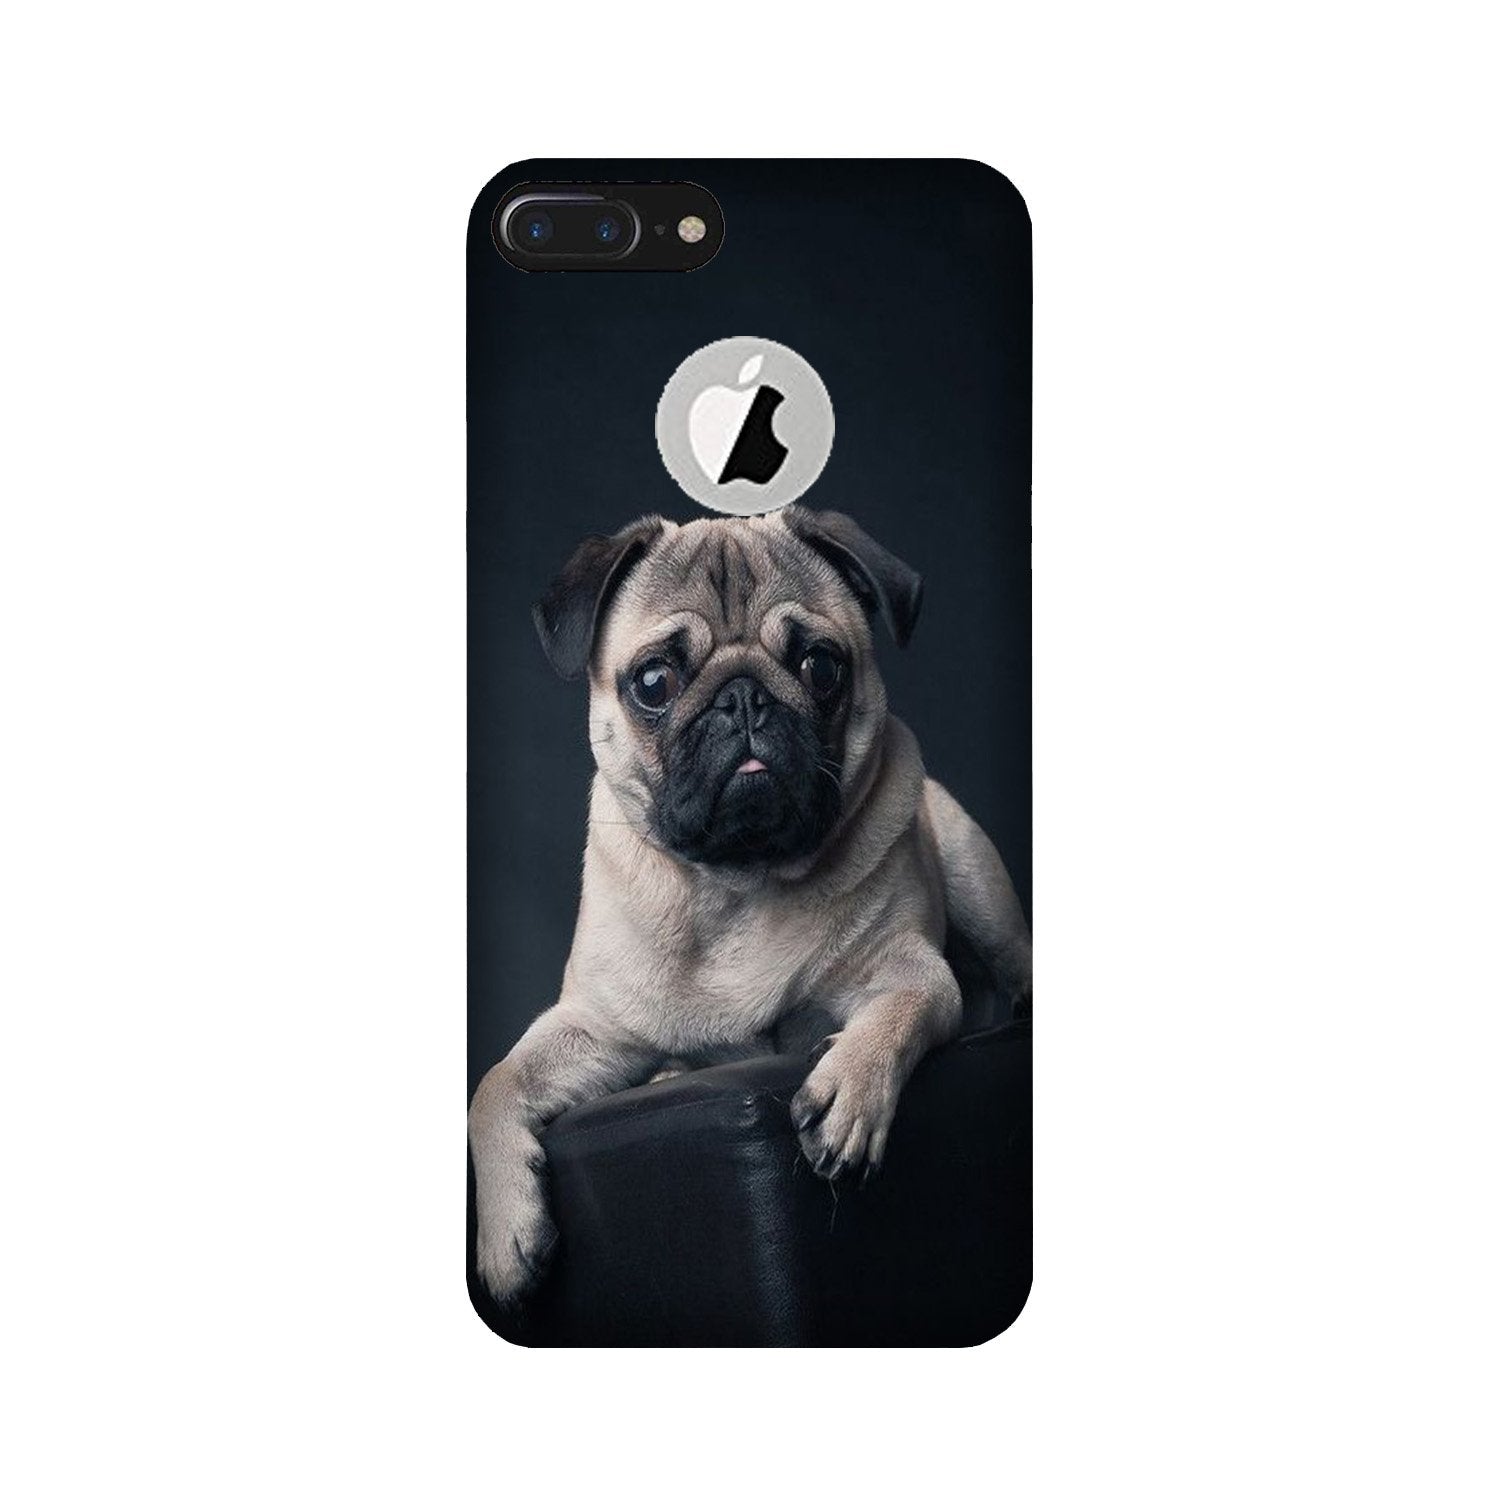 little Puppy Case for iPhone 7 Plus logo cut